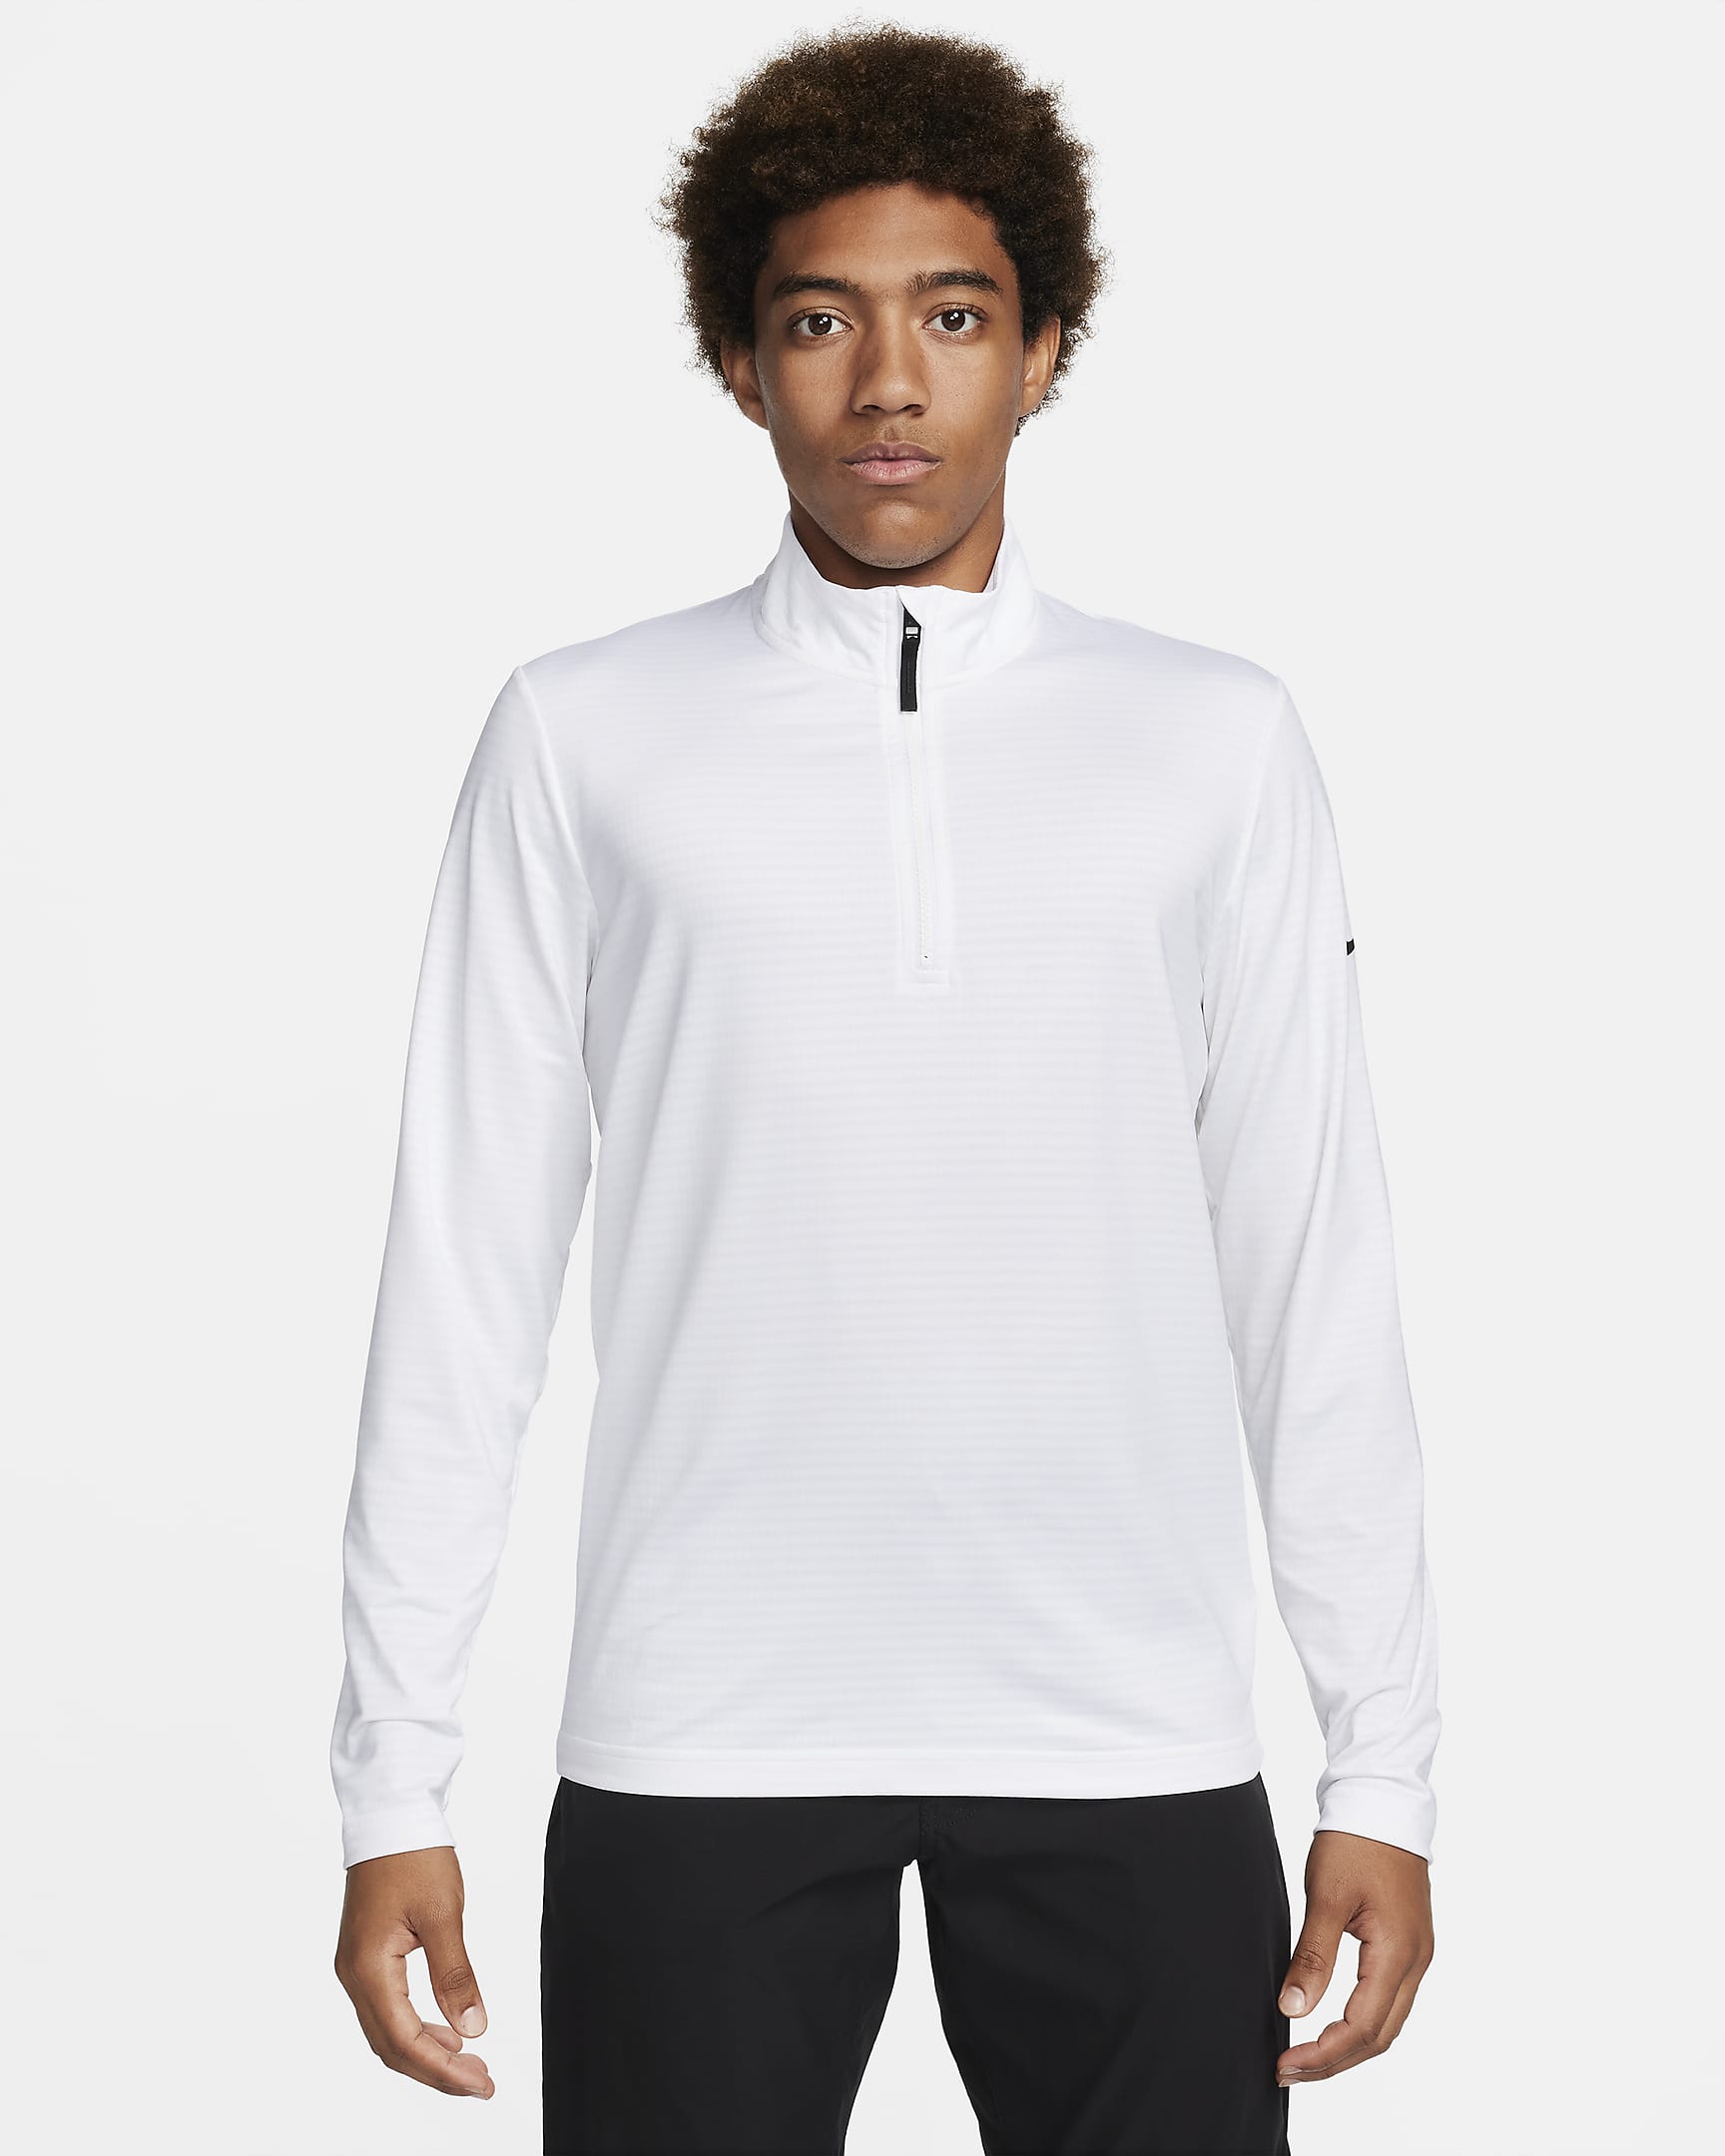 Nike Victory Men's Dri-FIT 1/2-Zip Golf Top - White/Black